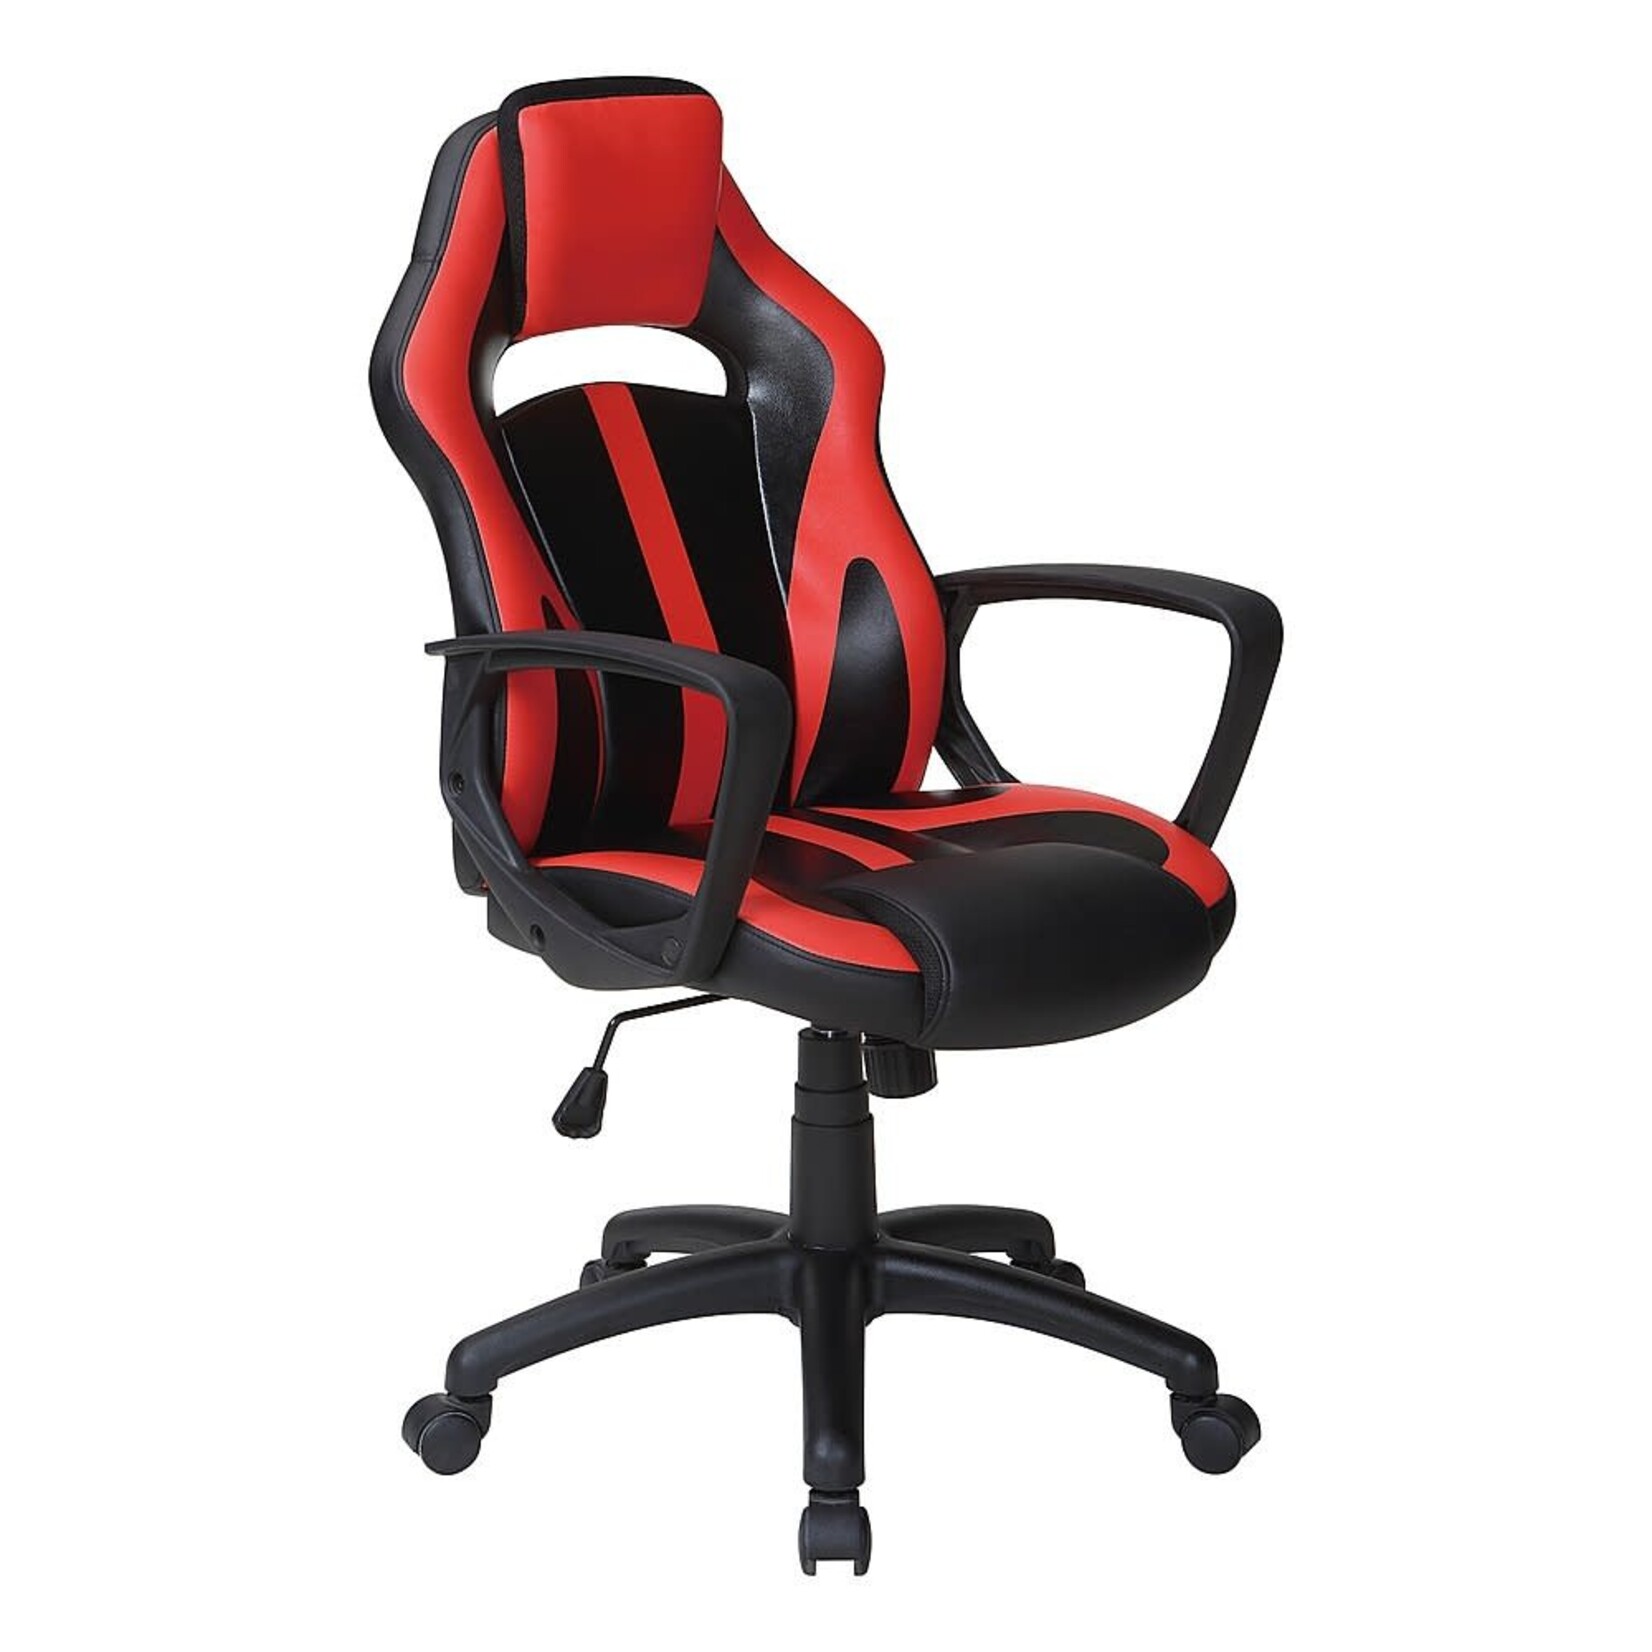 Designlab Kids Gaming Chair- Red